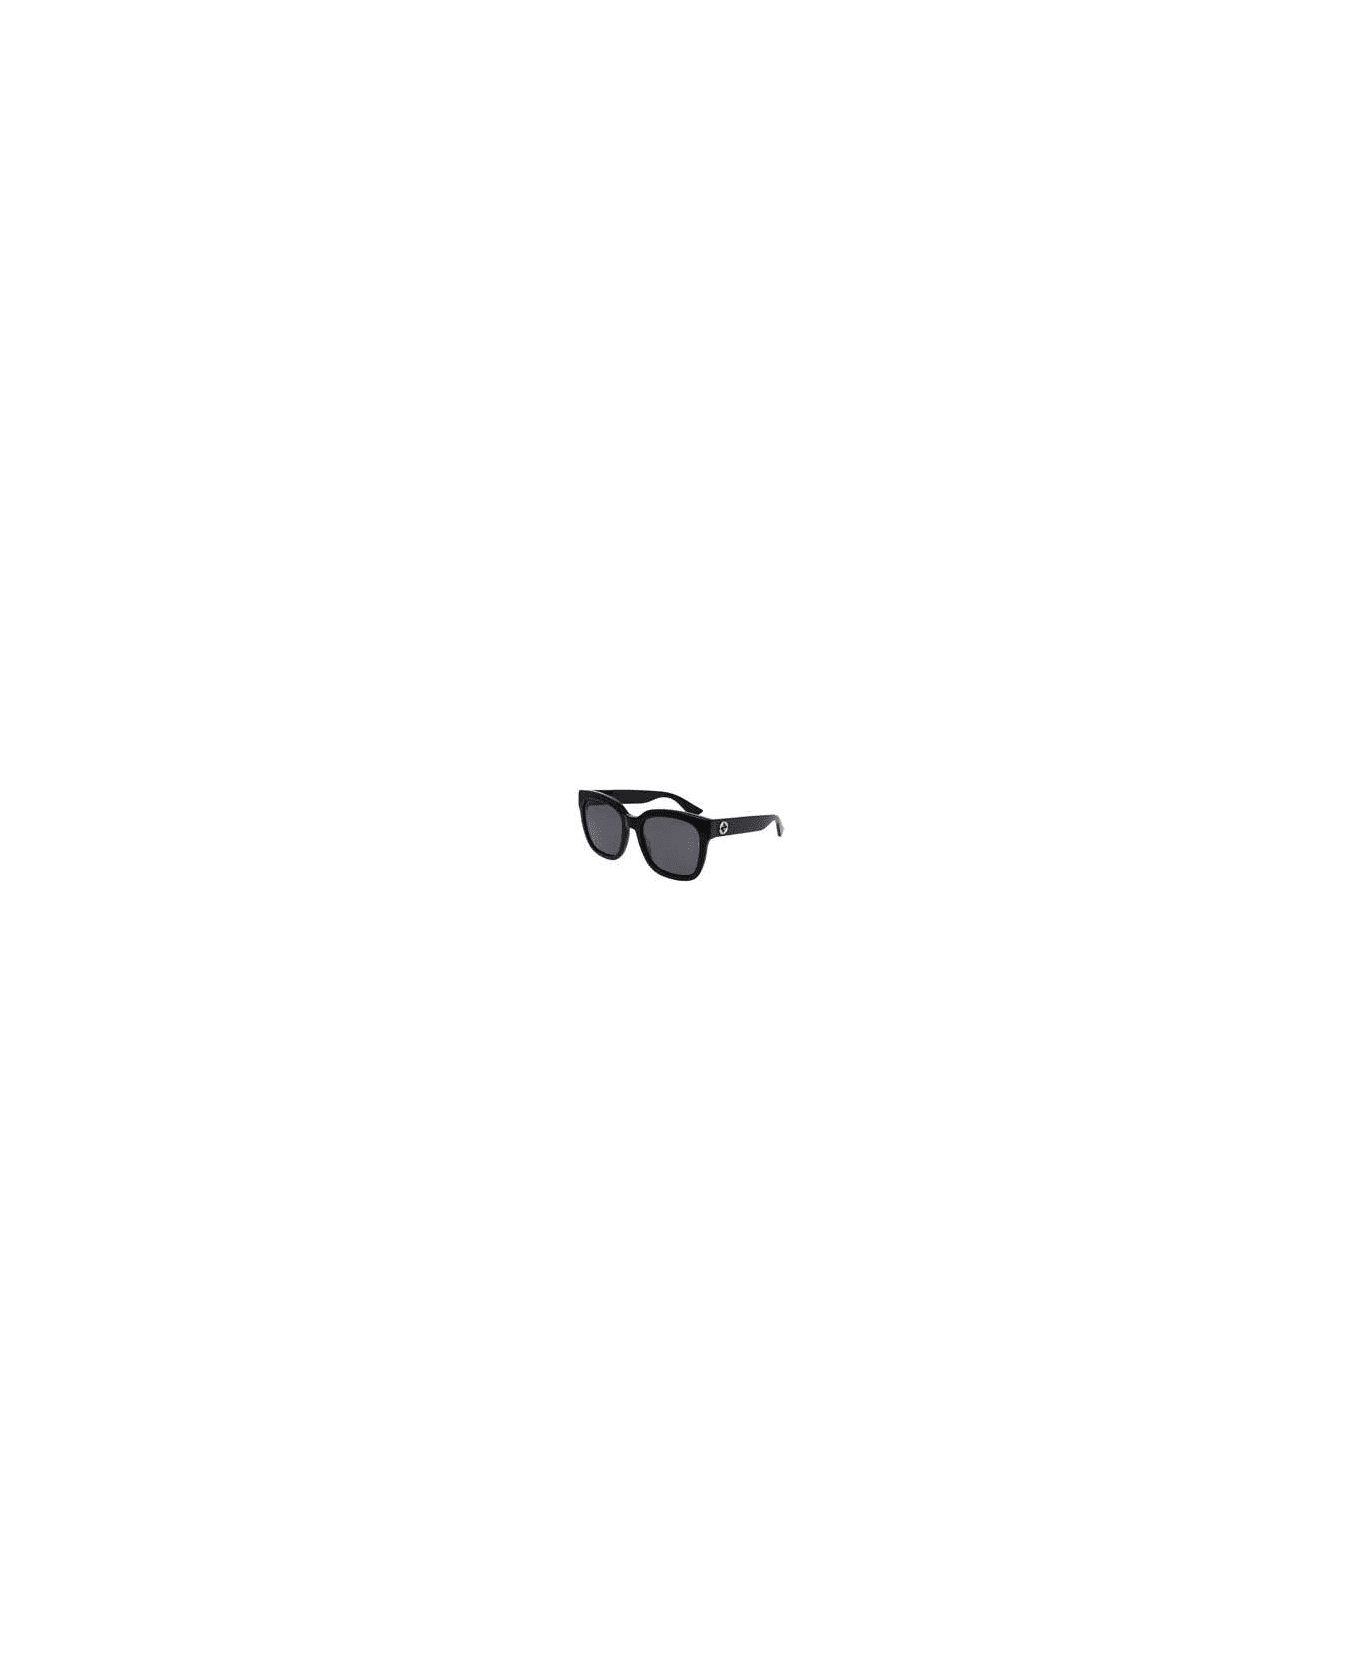 Gucci Eyewear Gg0034sn Sunglasses - 001 black black grey サングラス